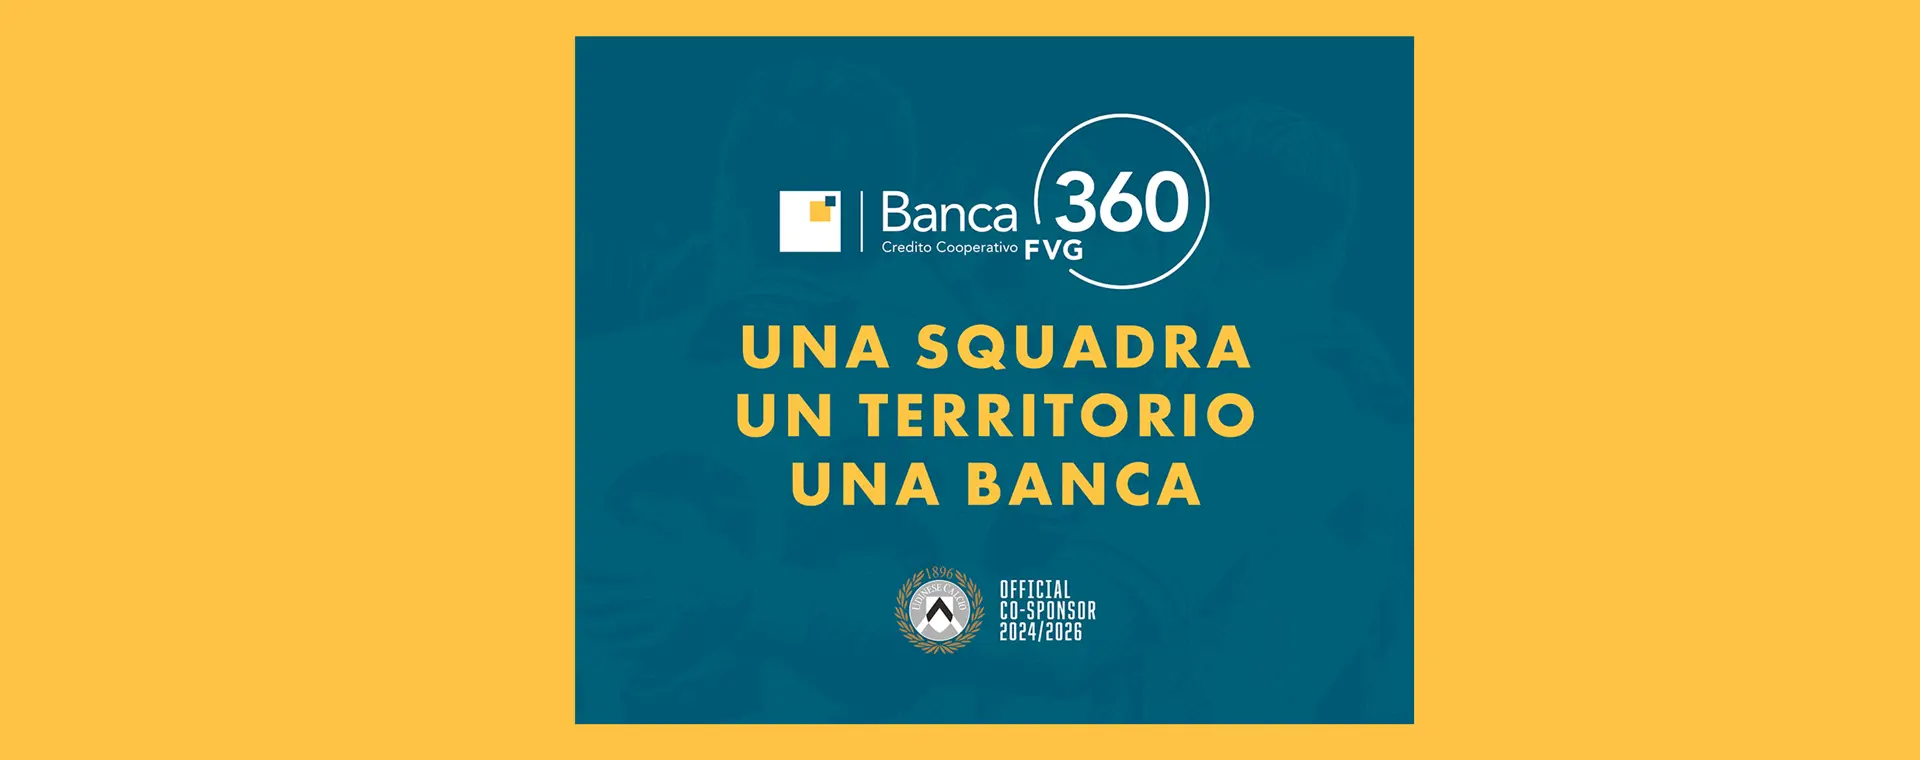 Banca 360 FVG nuovo co-sponsor di Udinese Calcio 